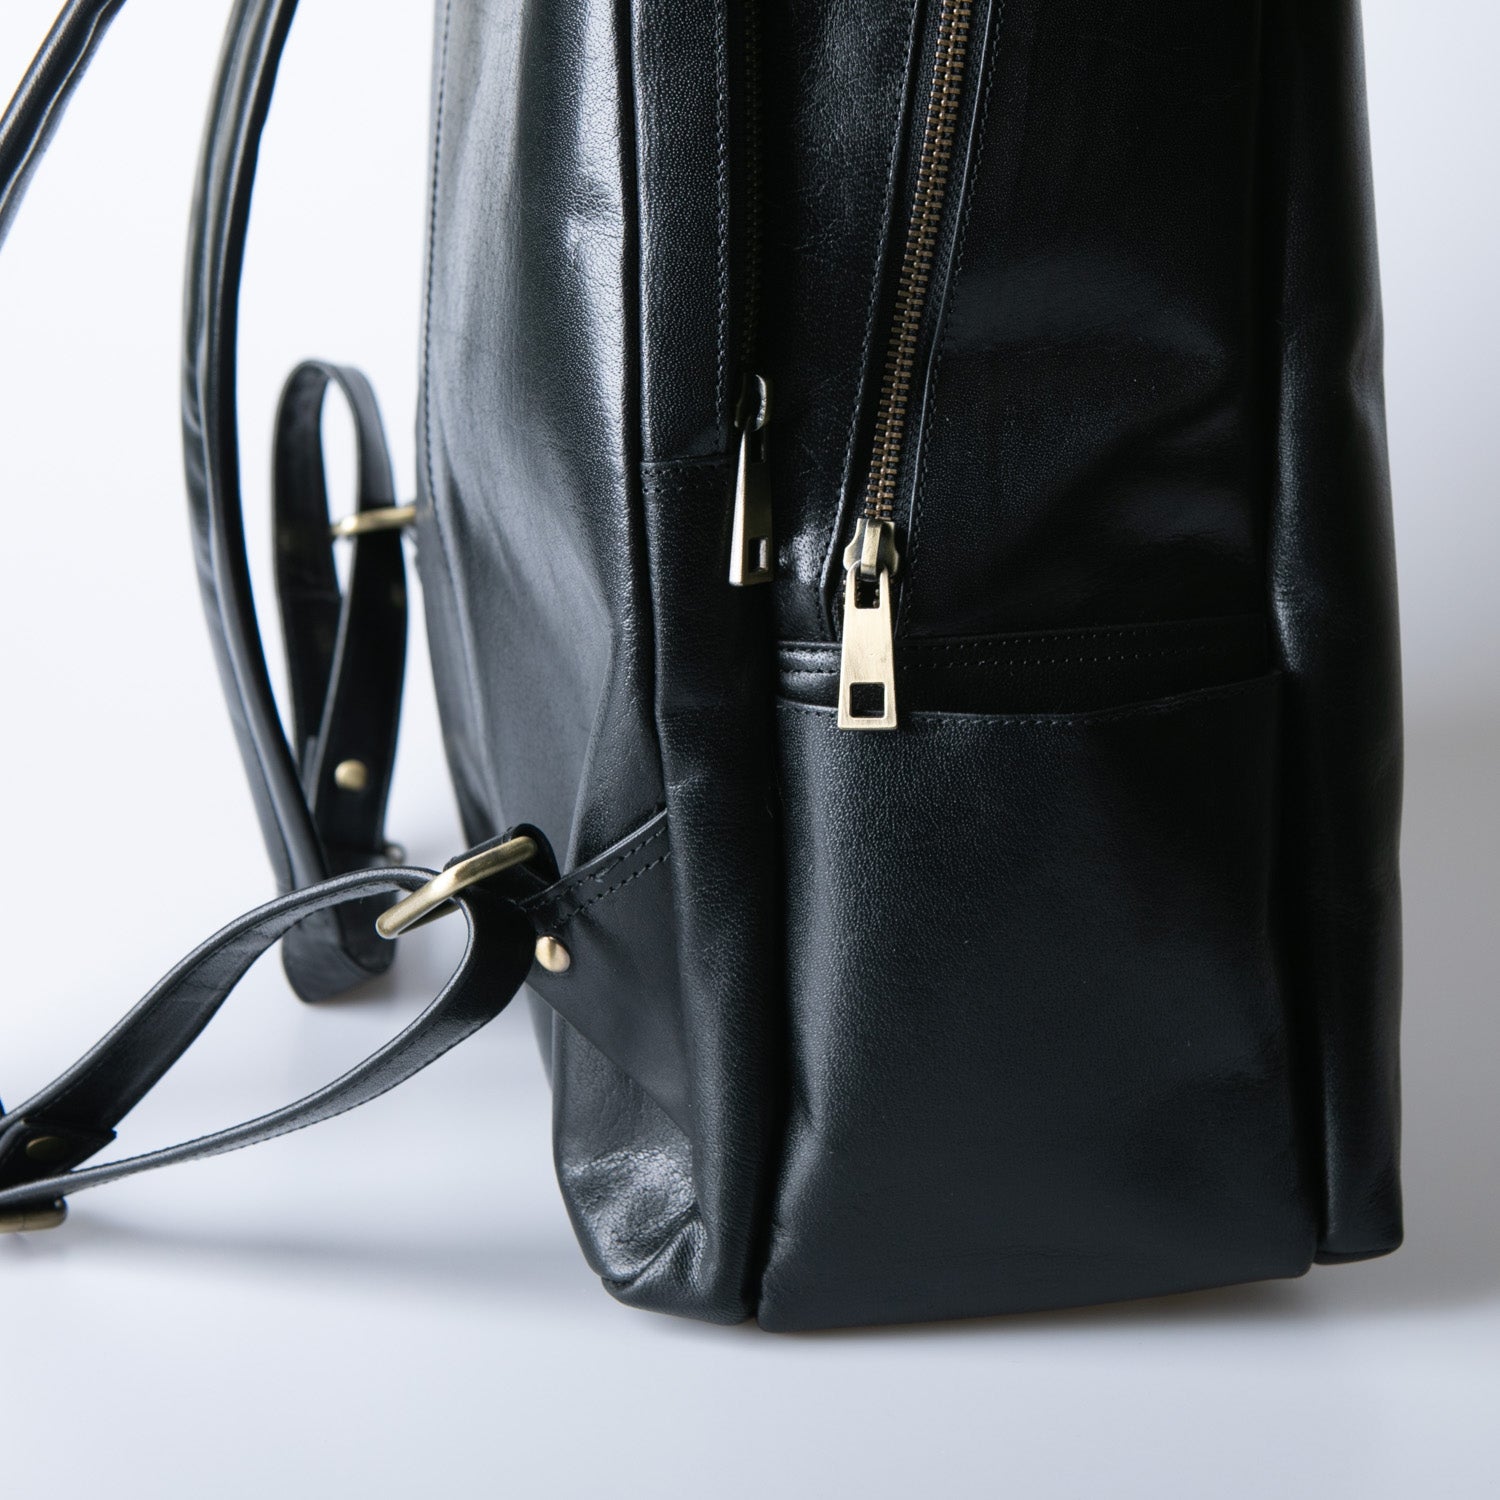 Business backpack genuine Leather waterproof Noble